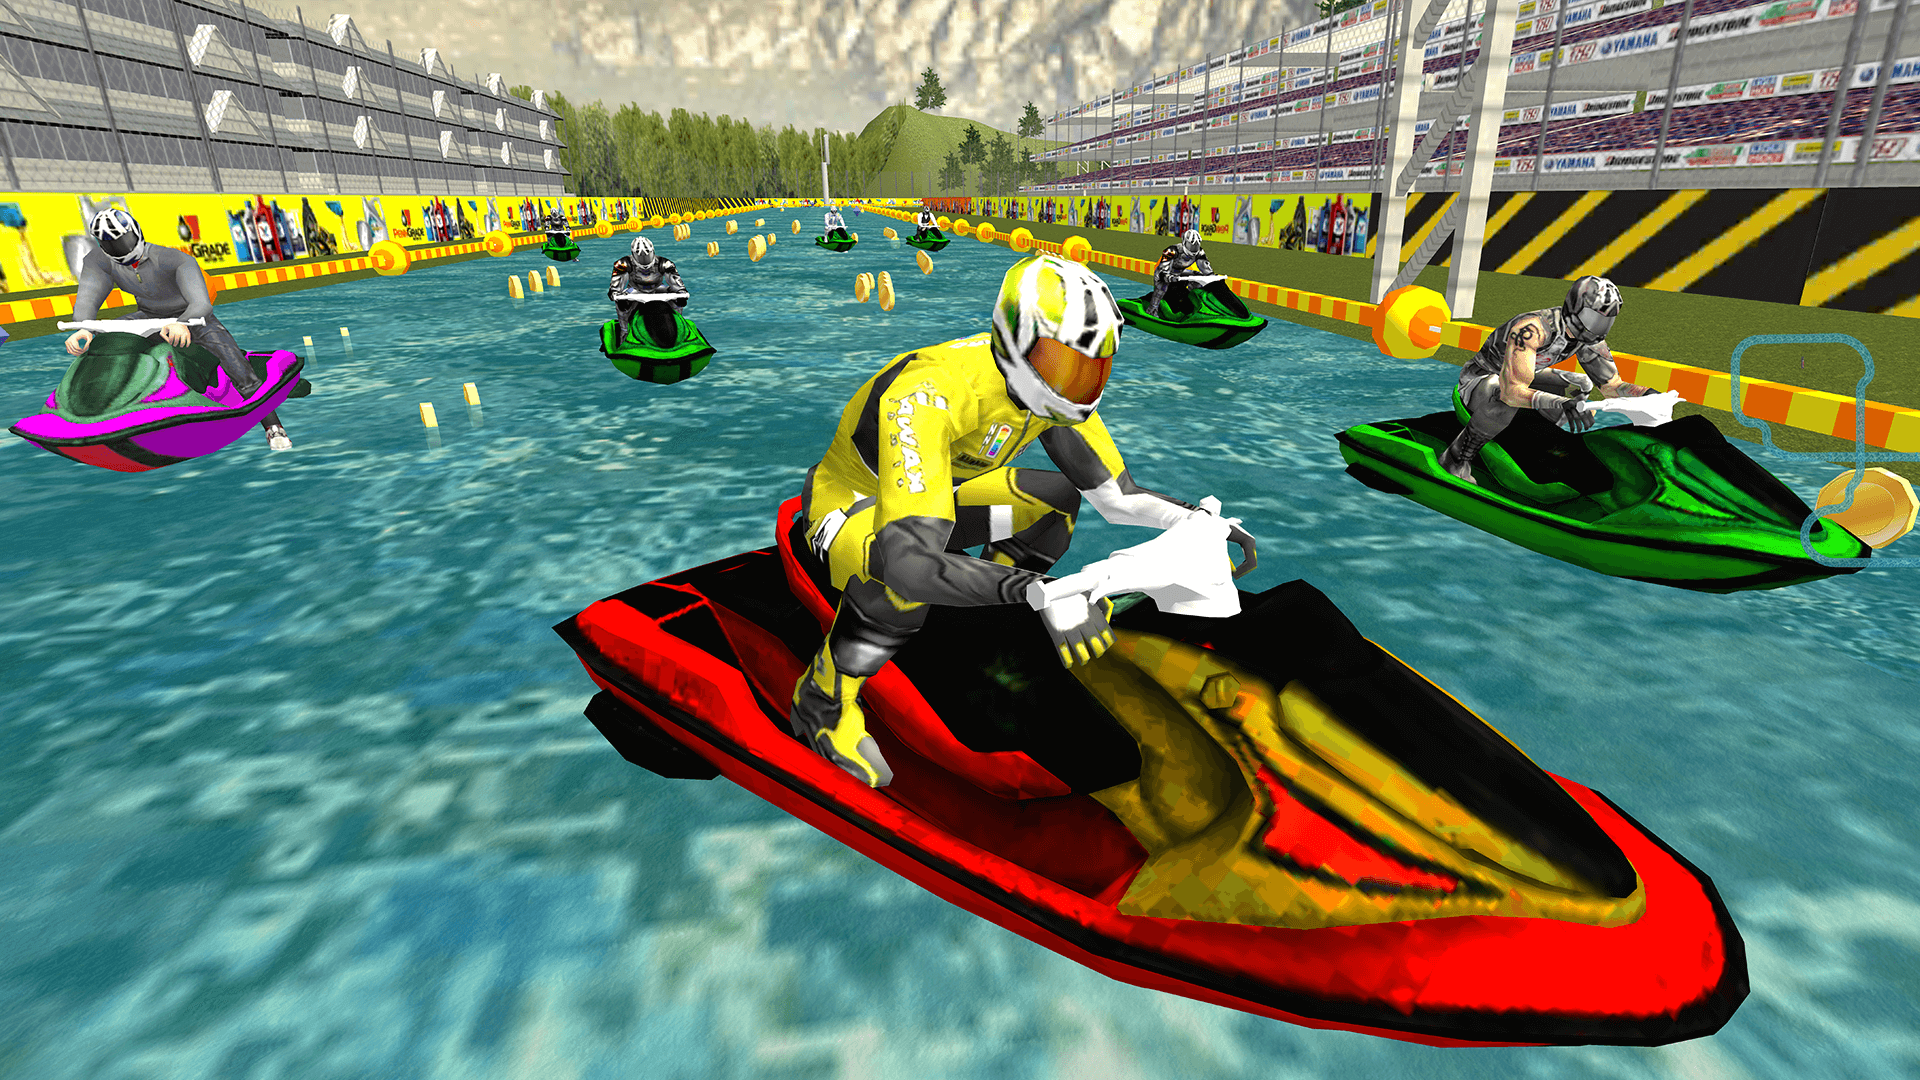 Splash - Boat Elimination Race